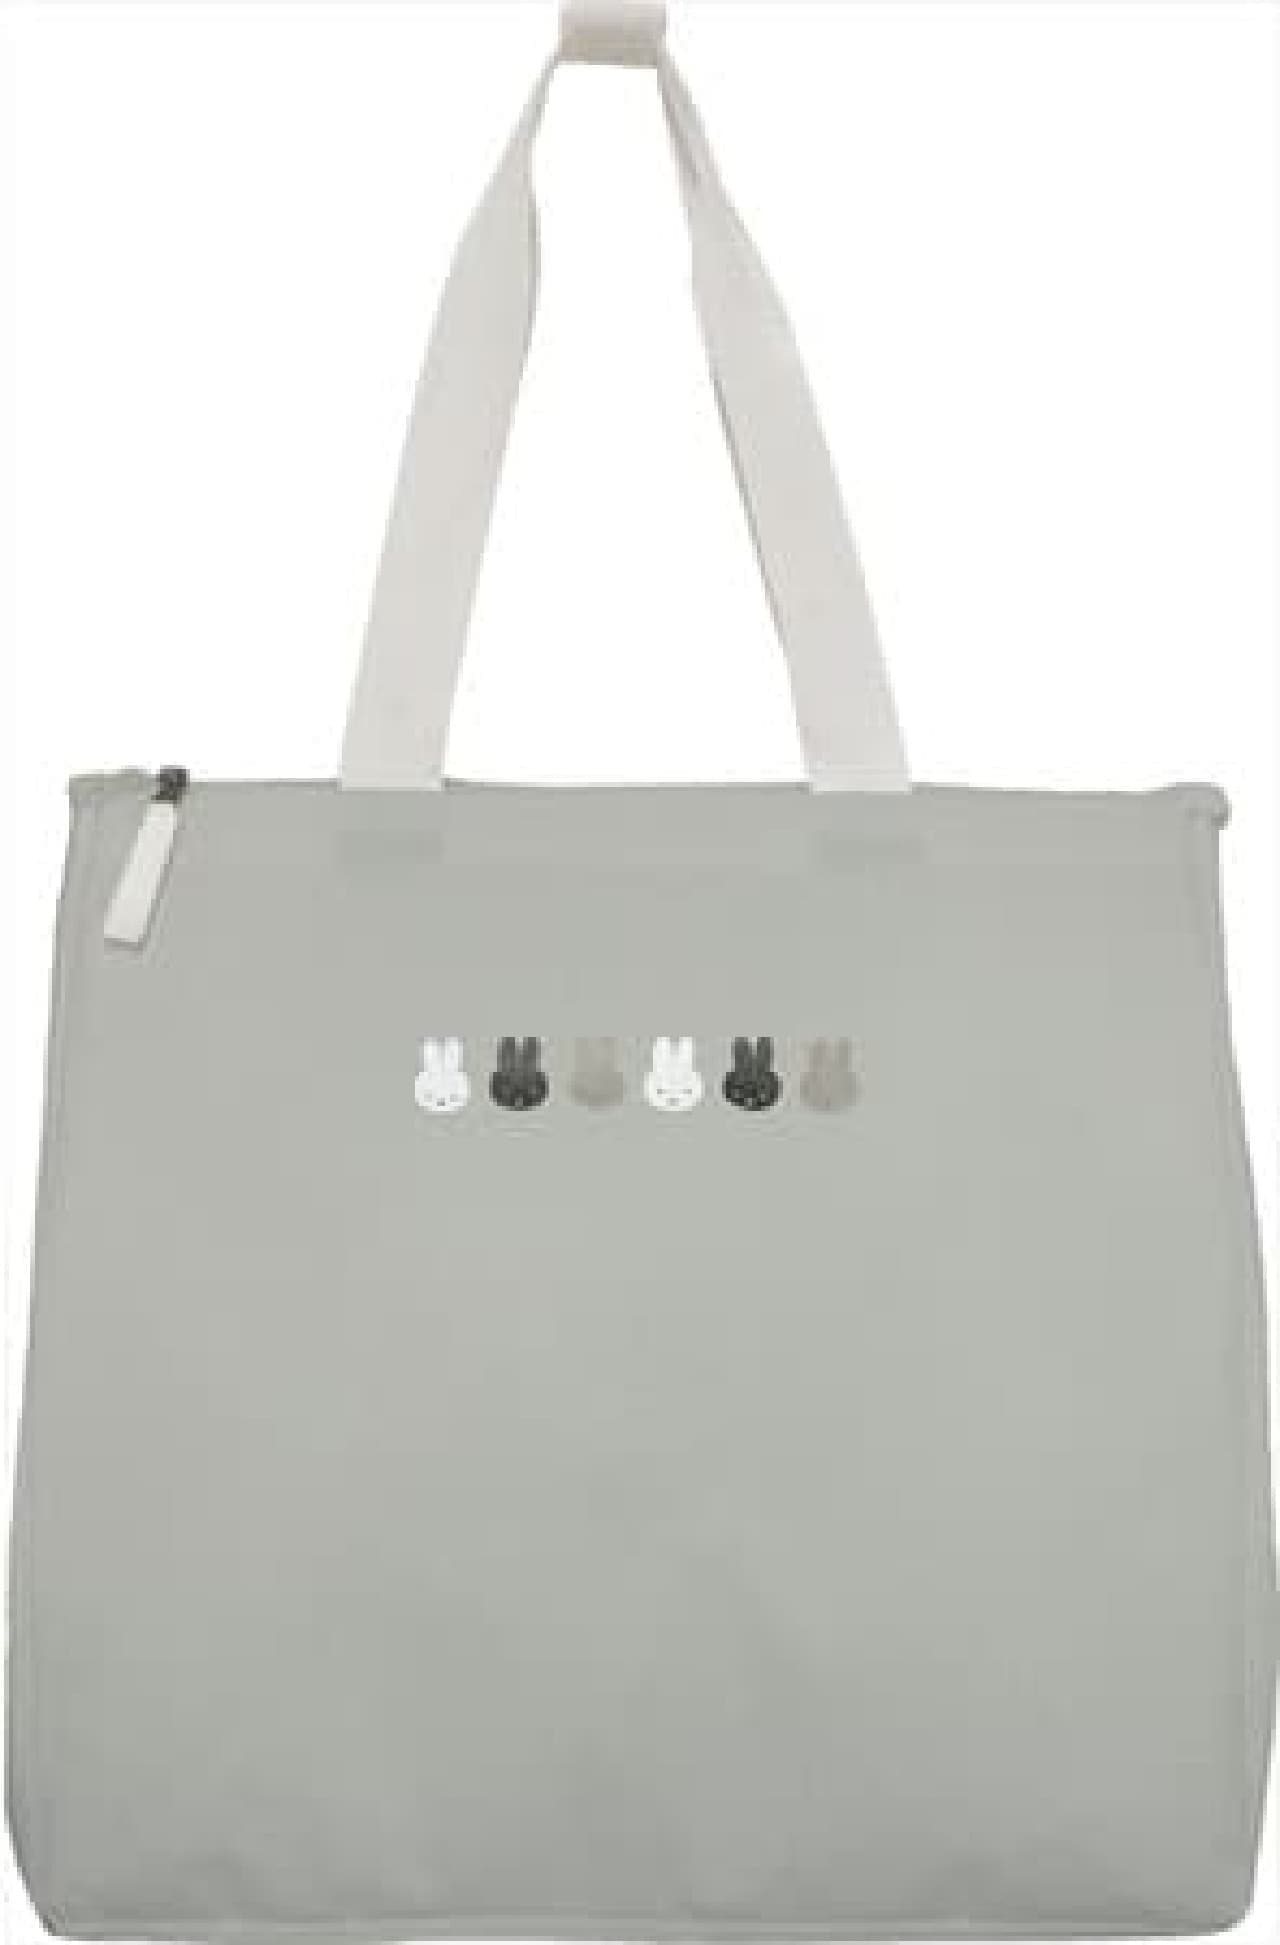 [Miffy] Laundry Square Bag